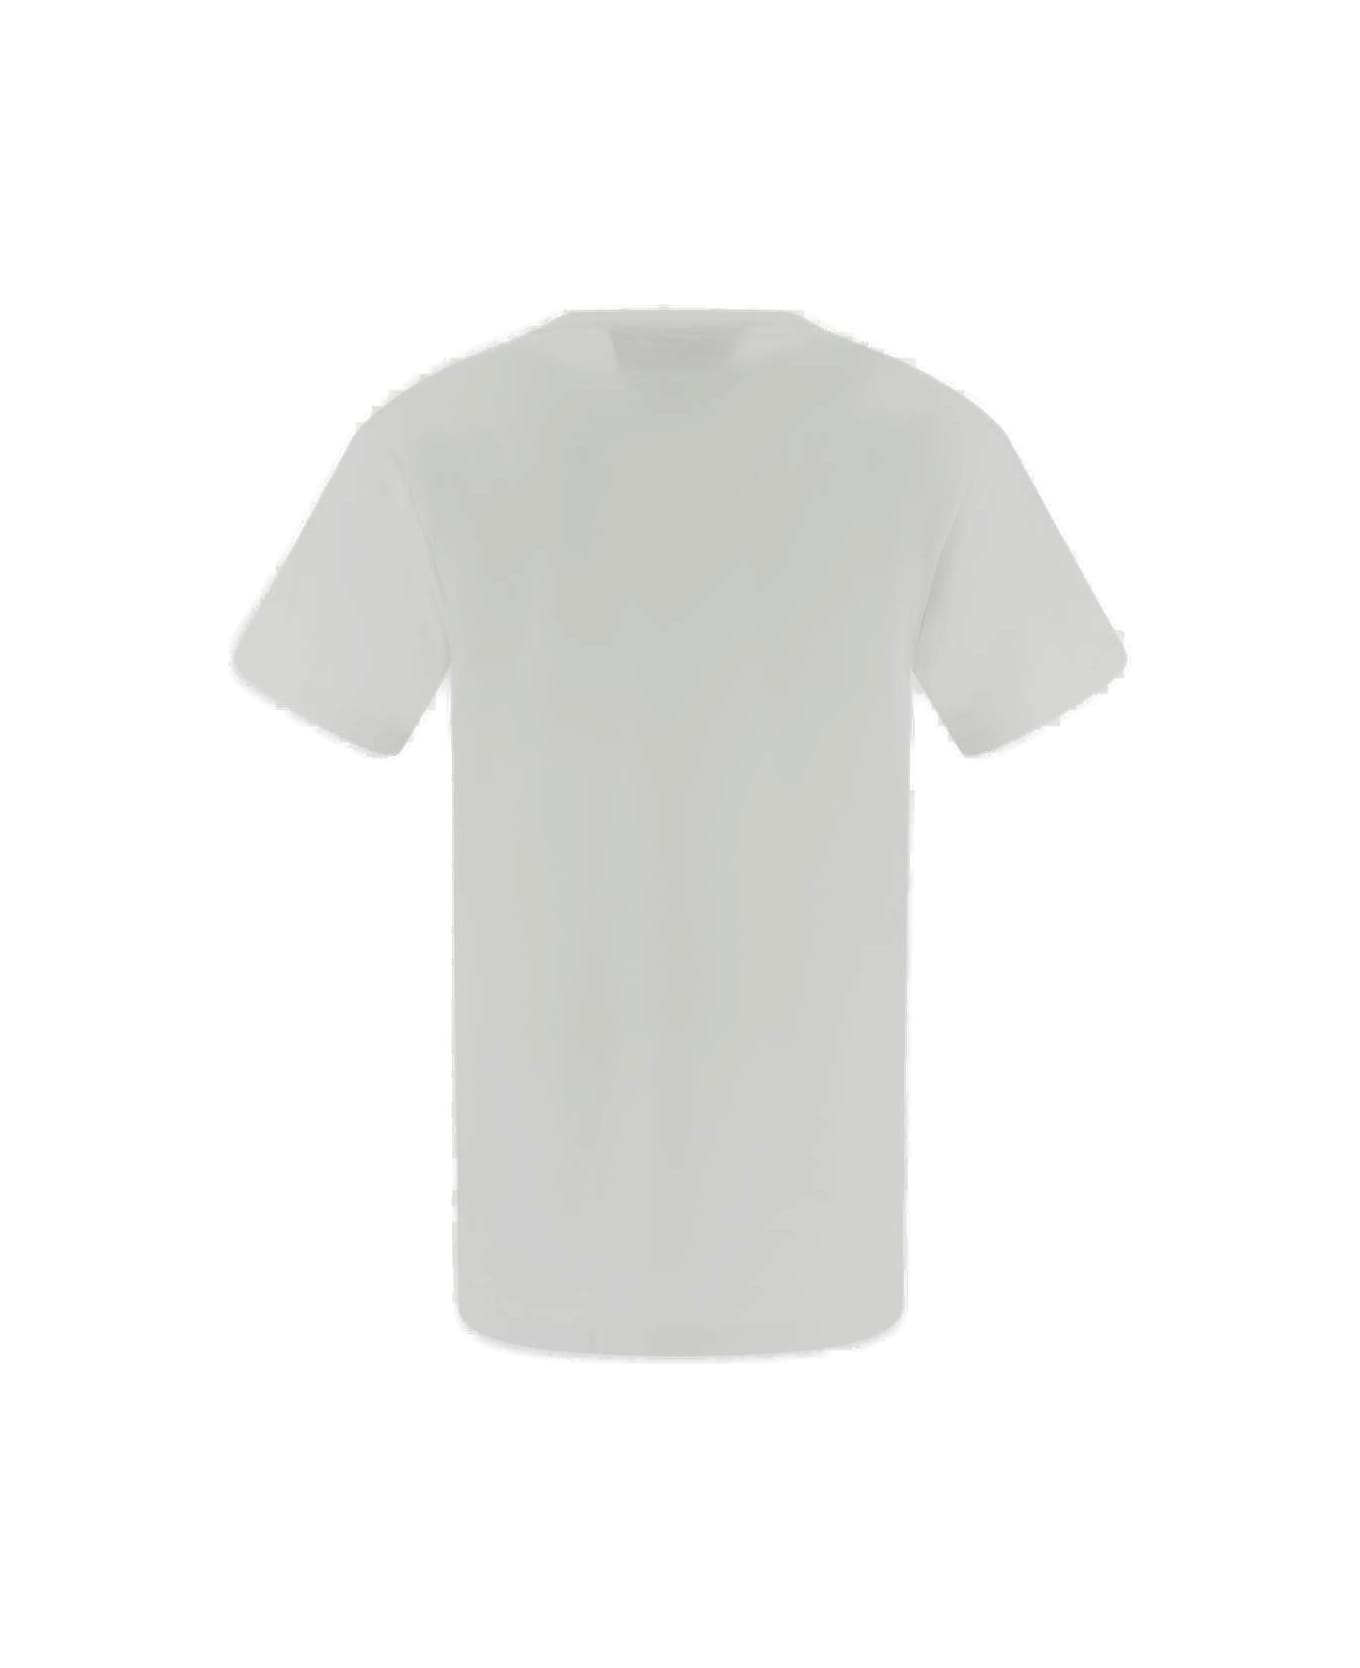 Moschino Logo Printed Crewneck T-shirt - Bianco